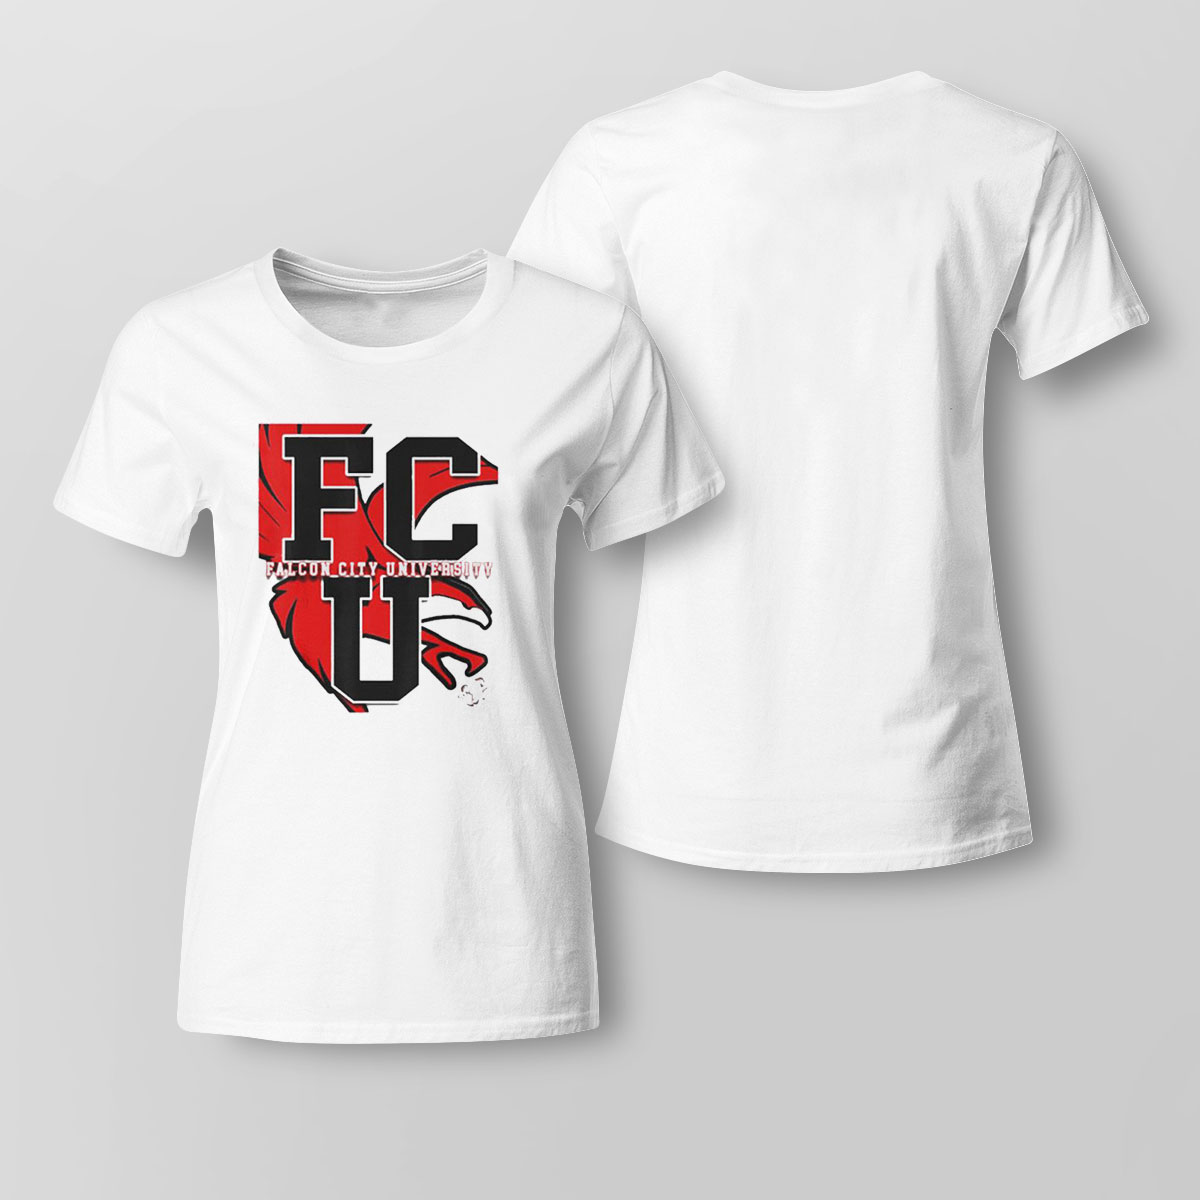 Falcon City University Shirt